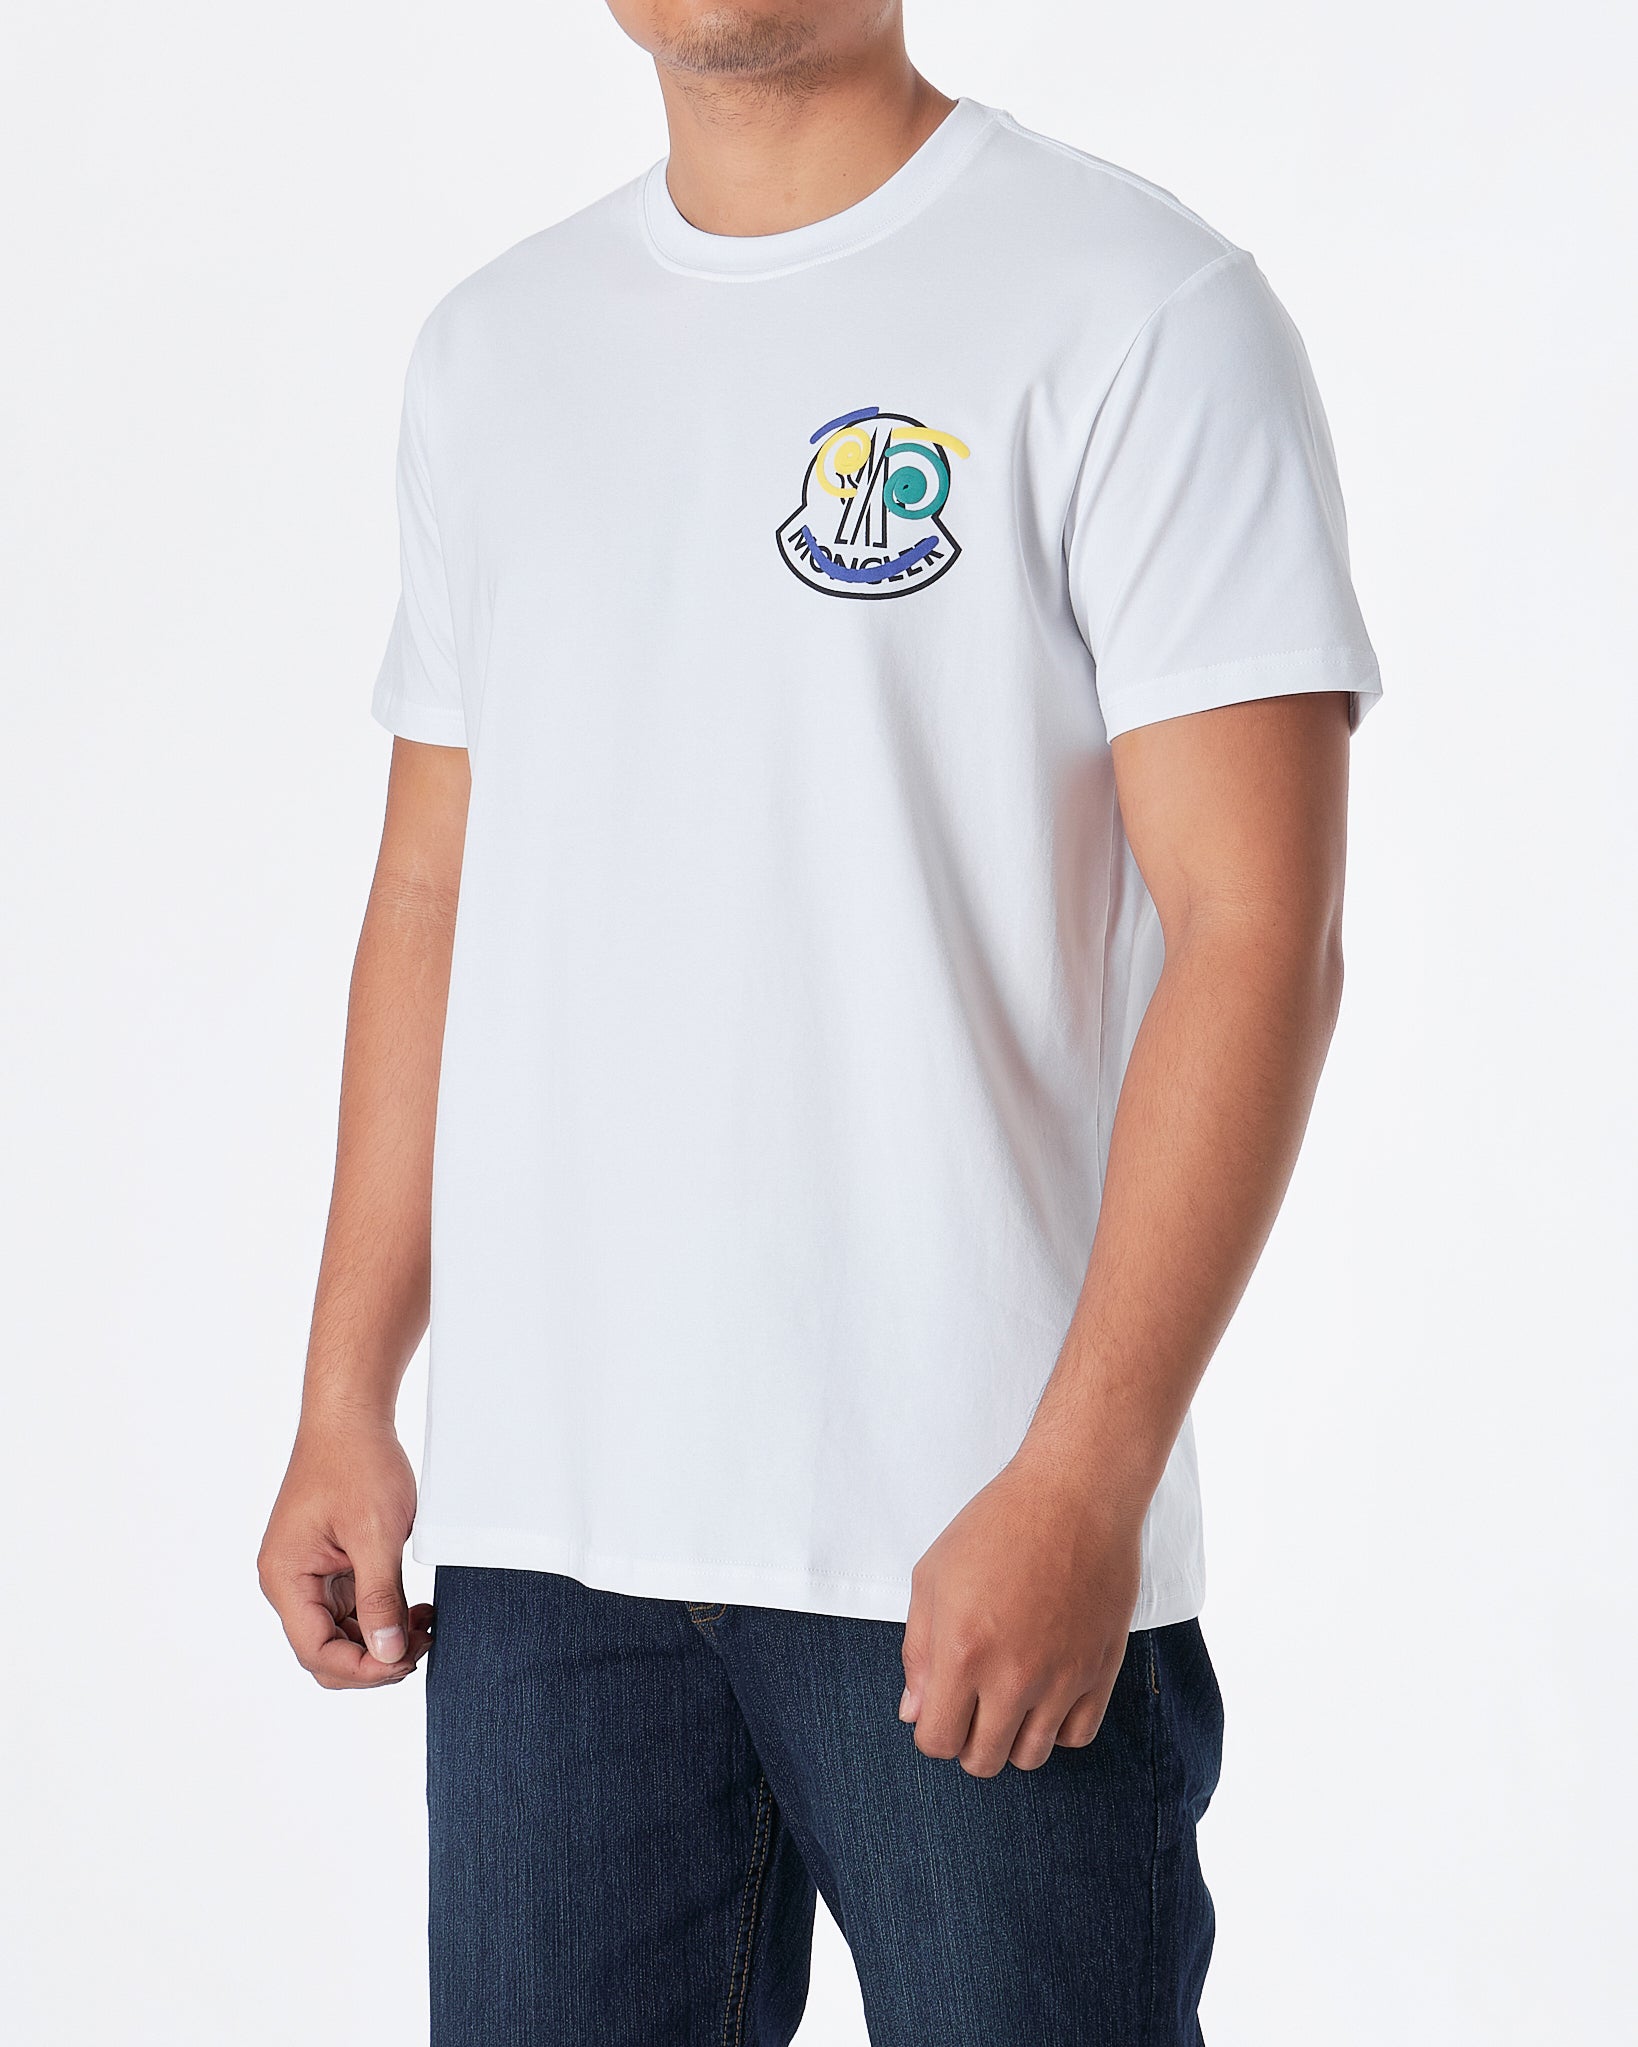 MOI OUTFIT-MON Round Back Printed Men White T-Shirt 19.90